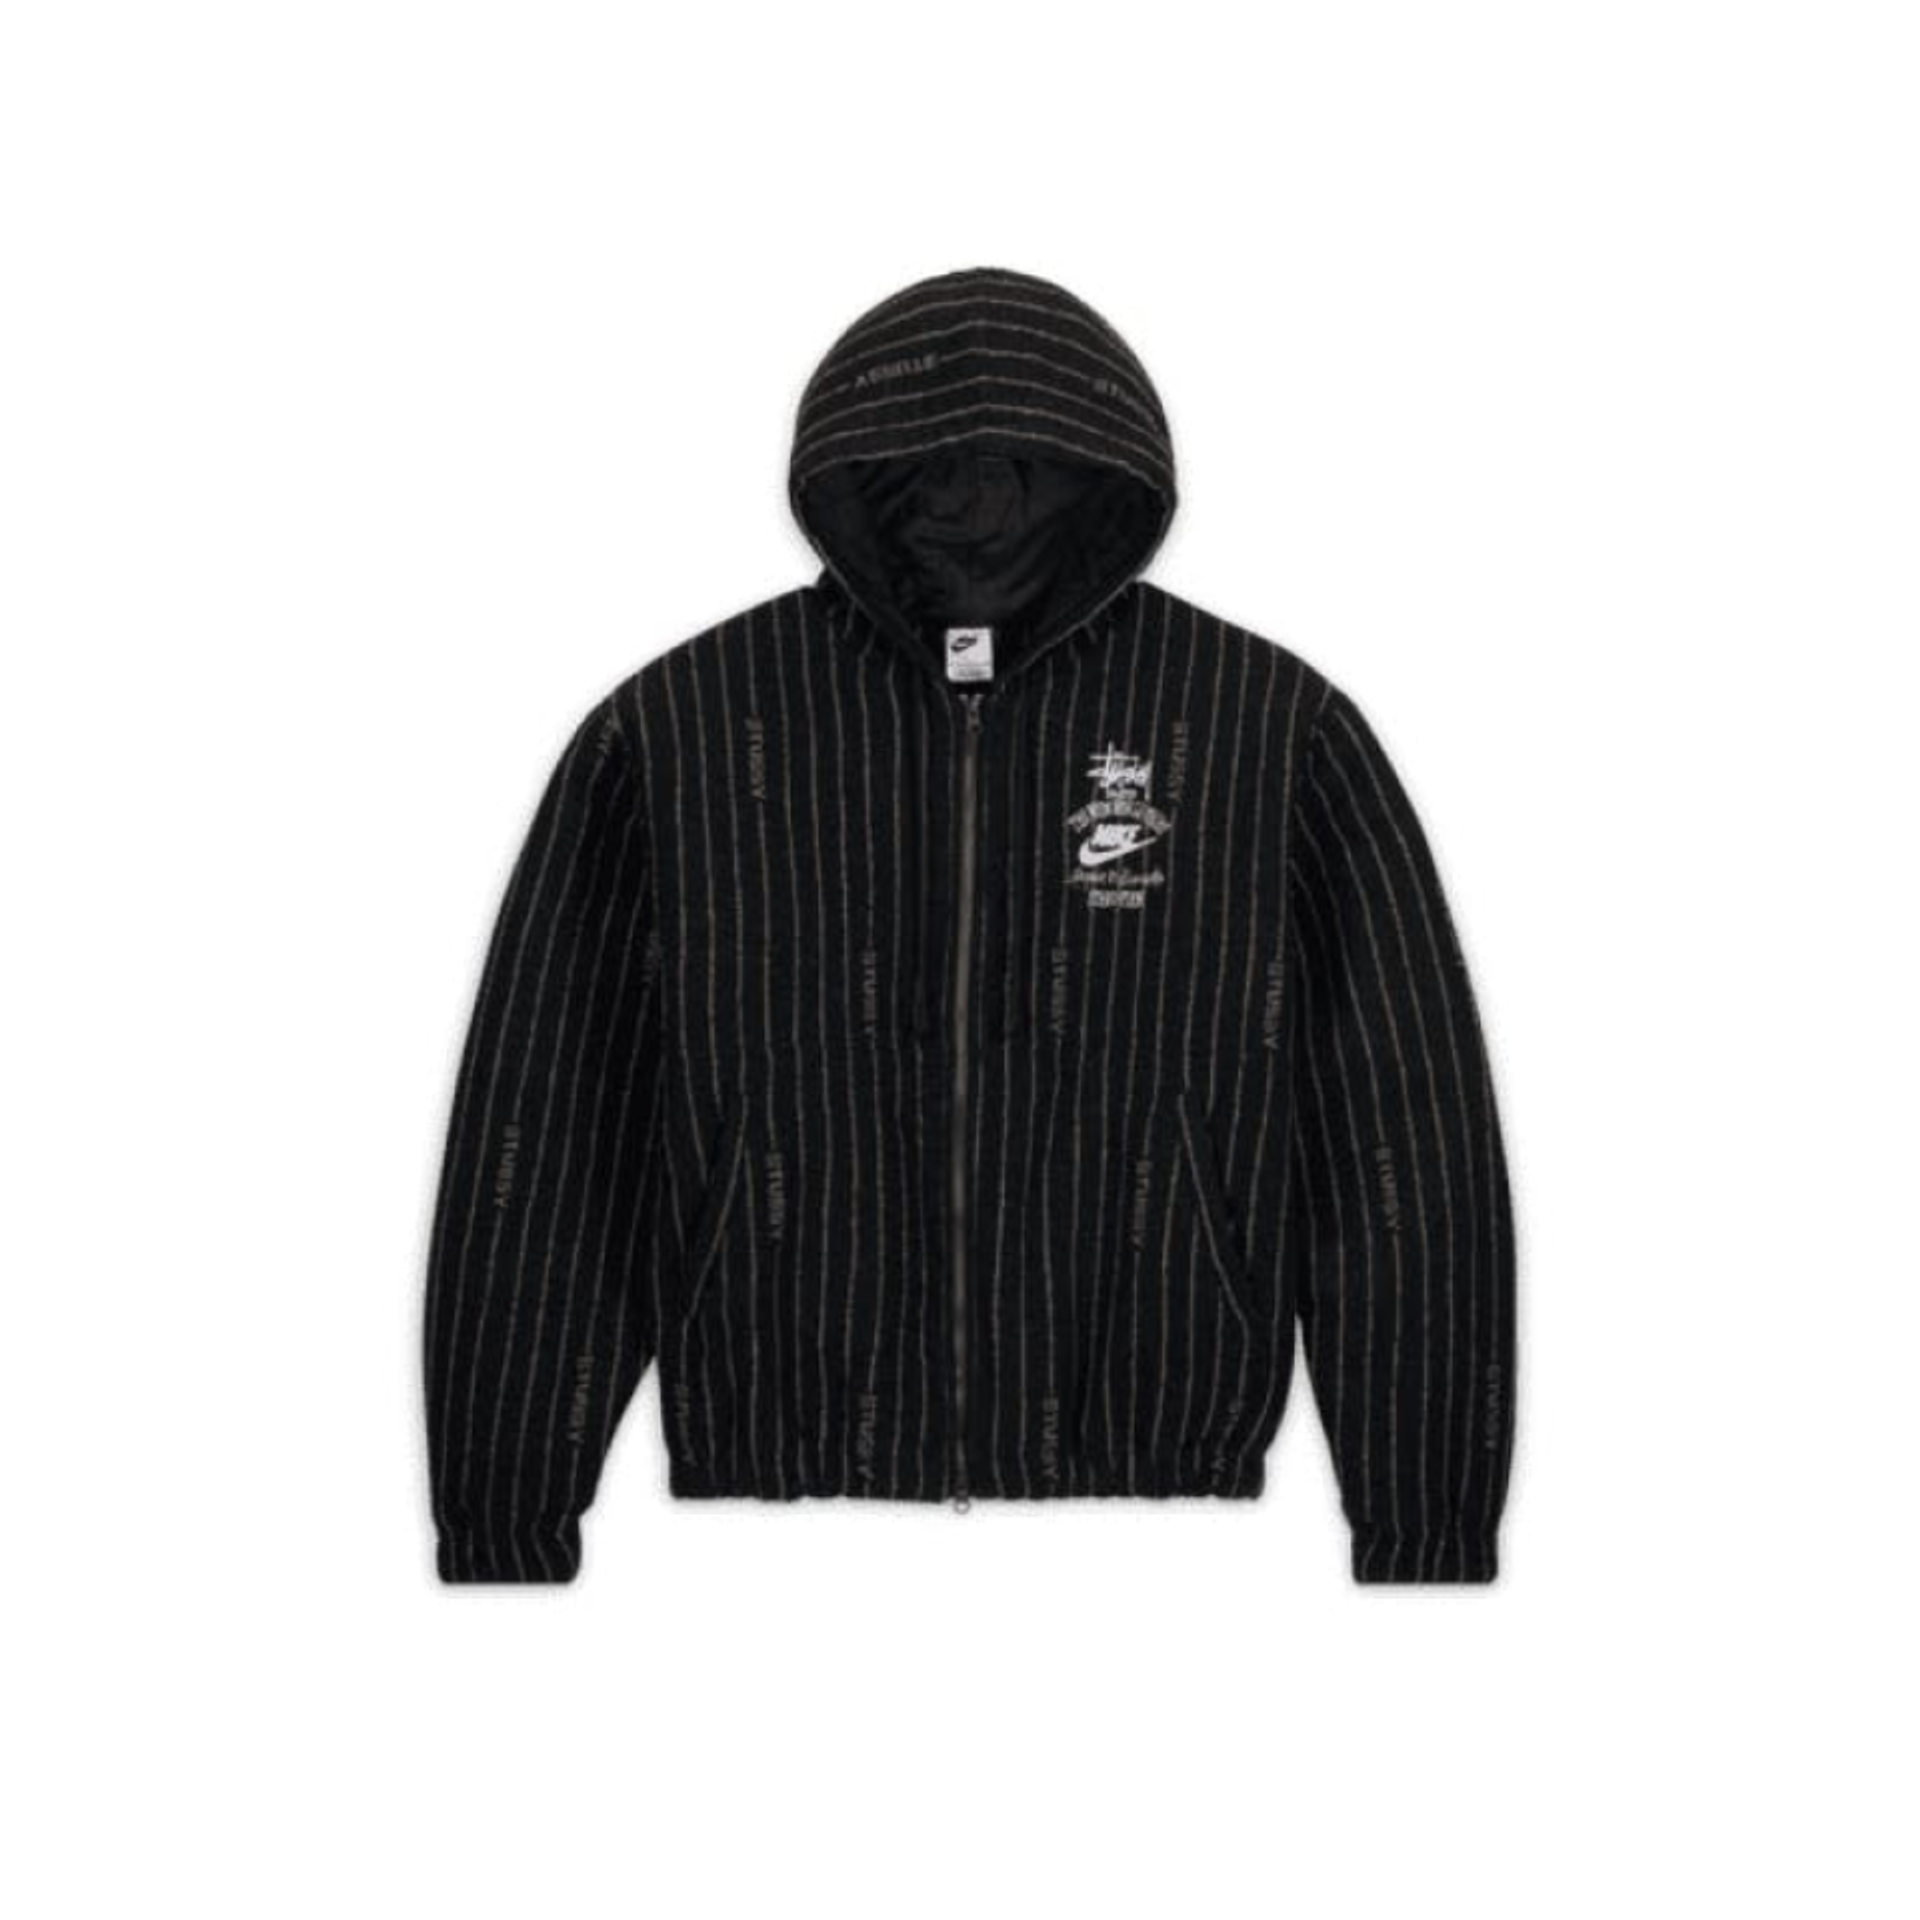 Stussy x Nike Striped Wool Jacket 'Black' (Asia Sizing)